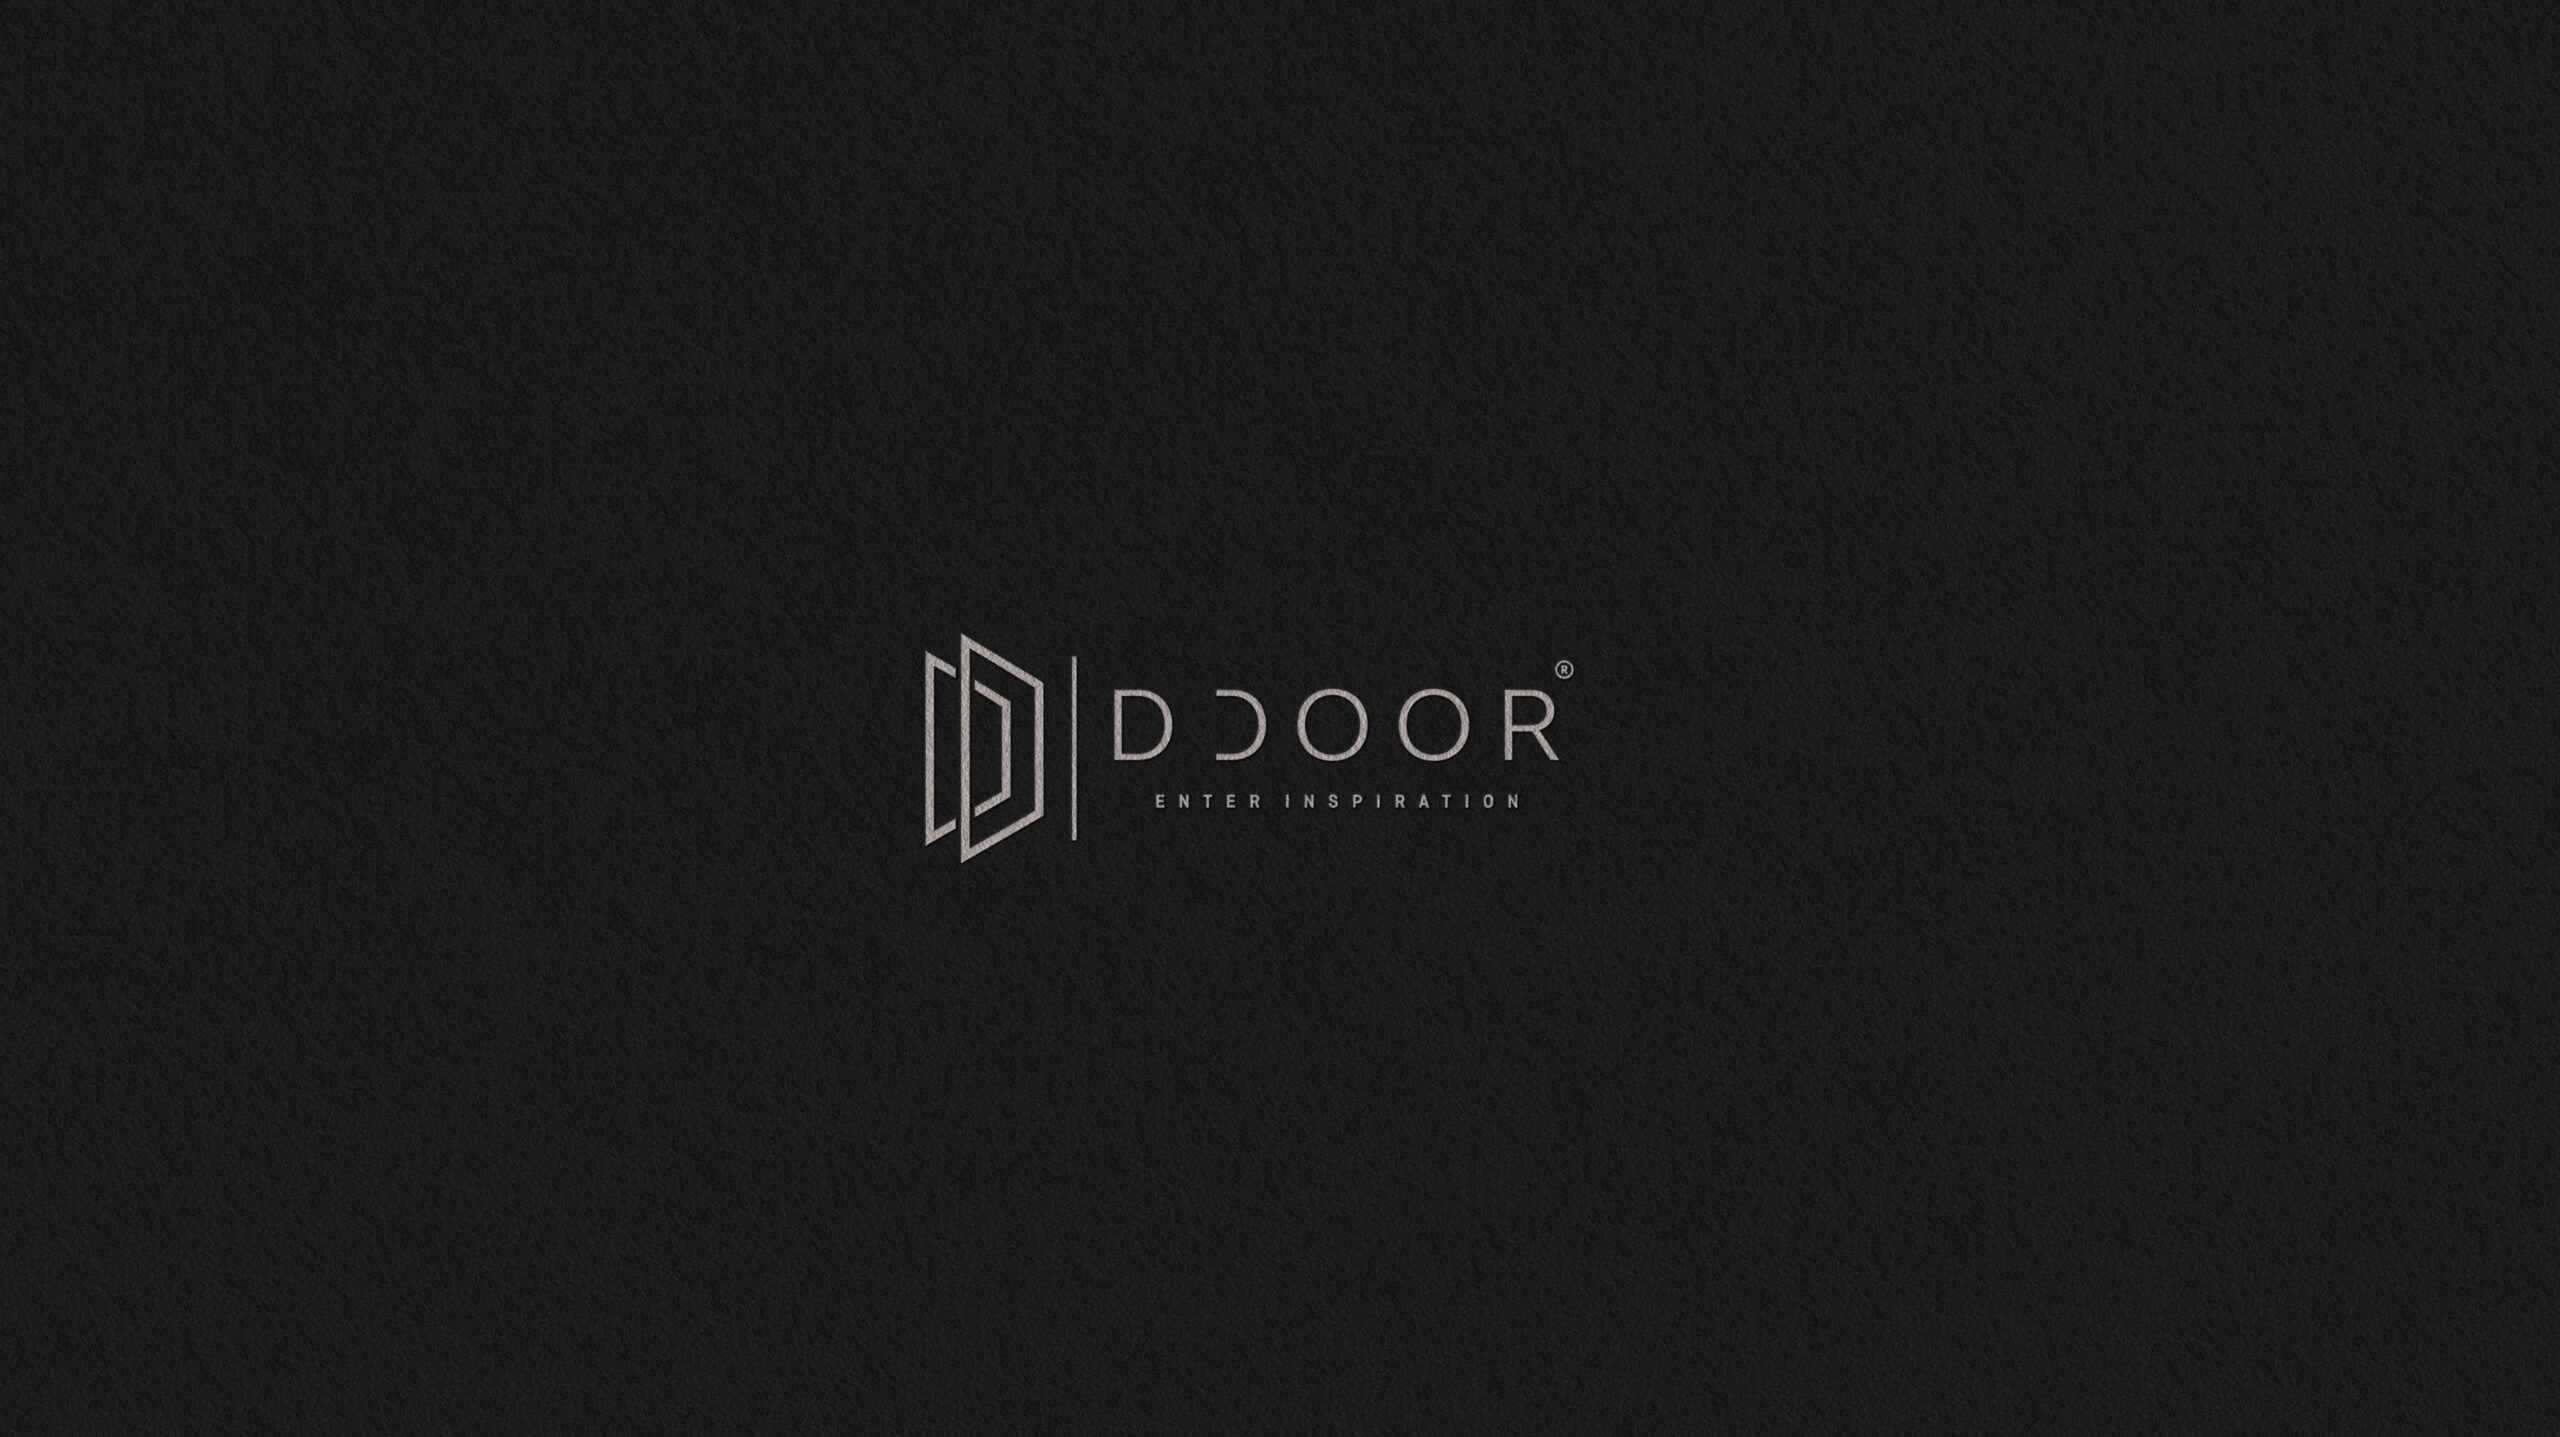 D Door - Enter Inspiration